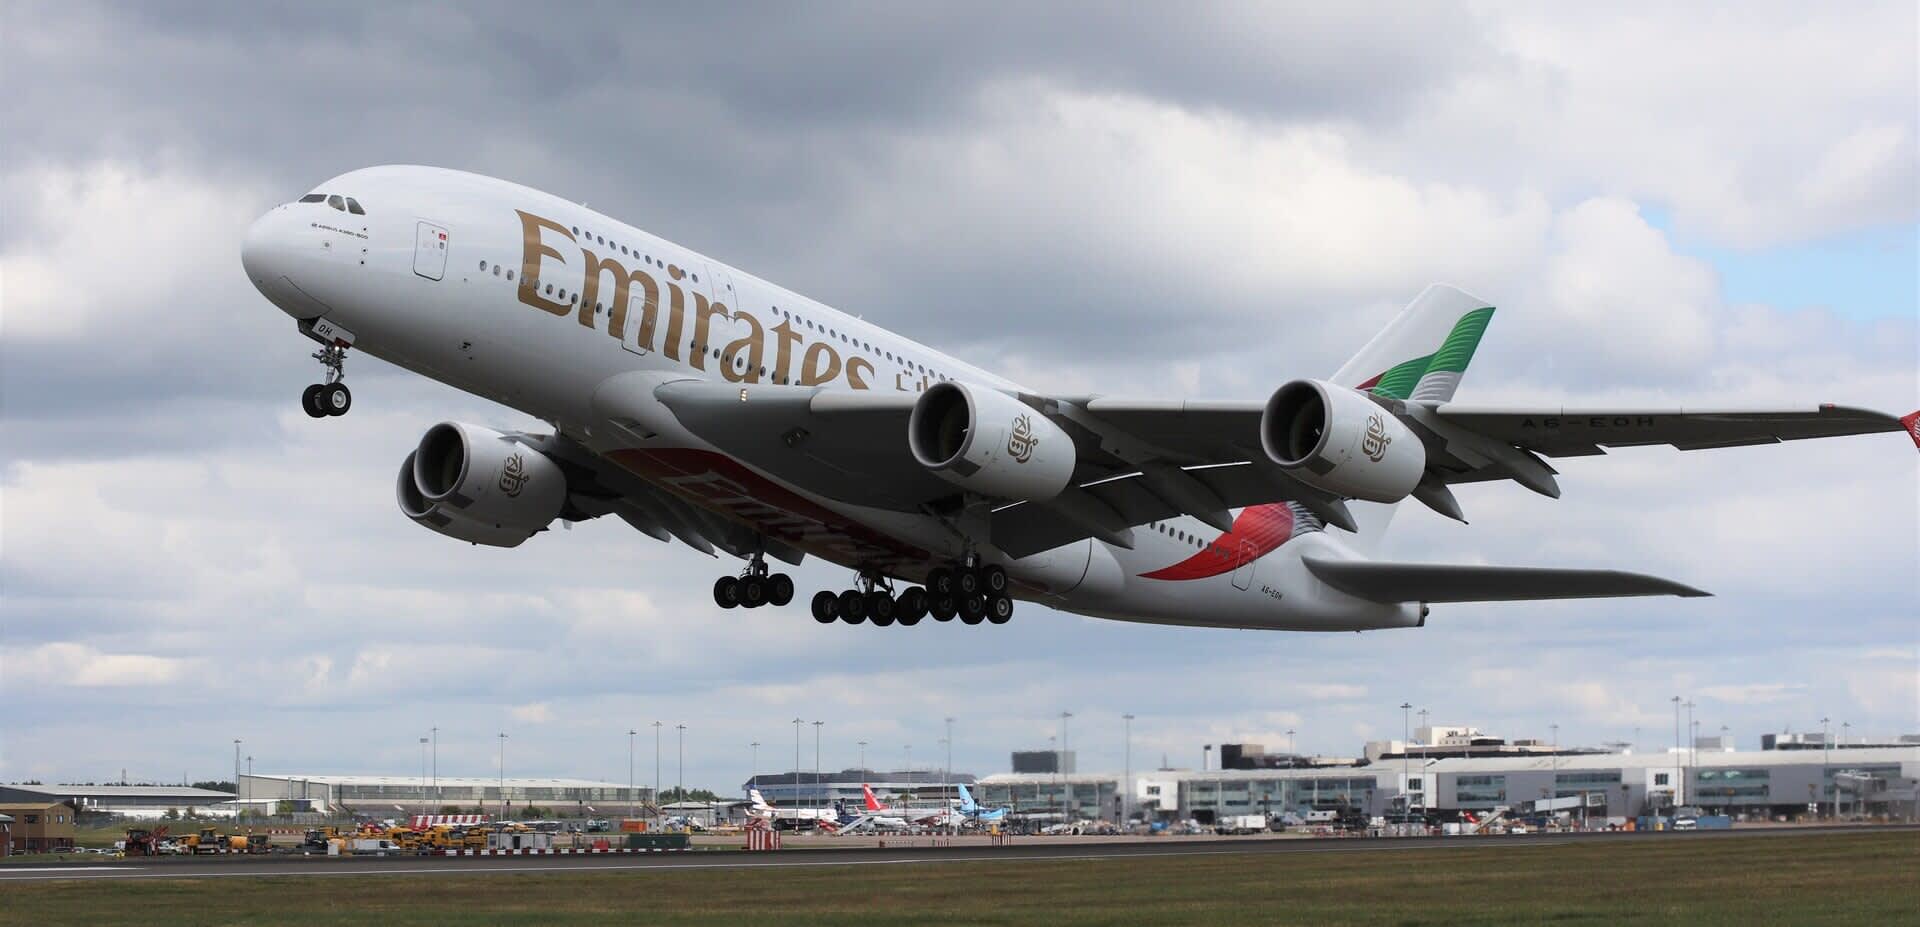 Emirates A380 landing at Birmingham Airport